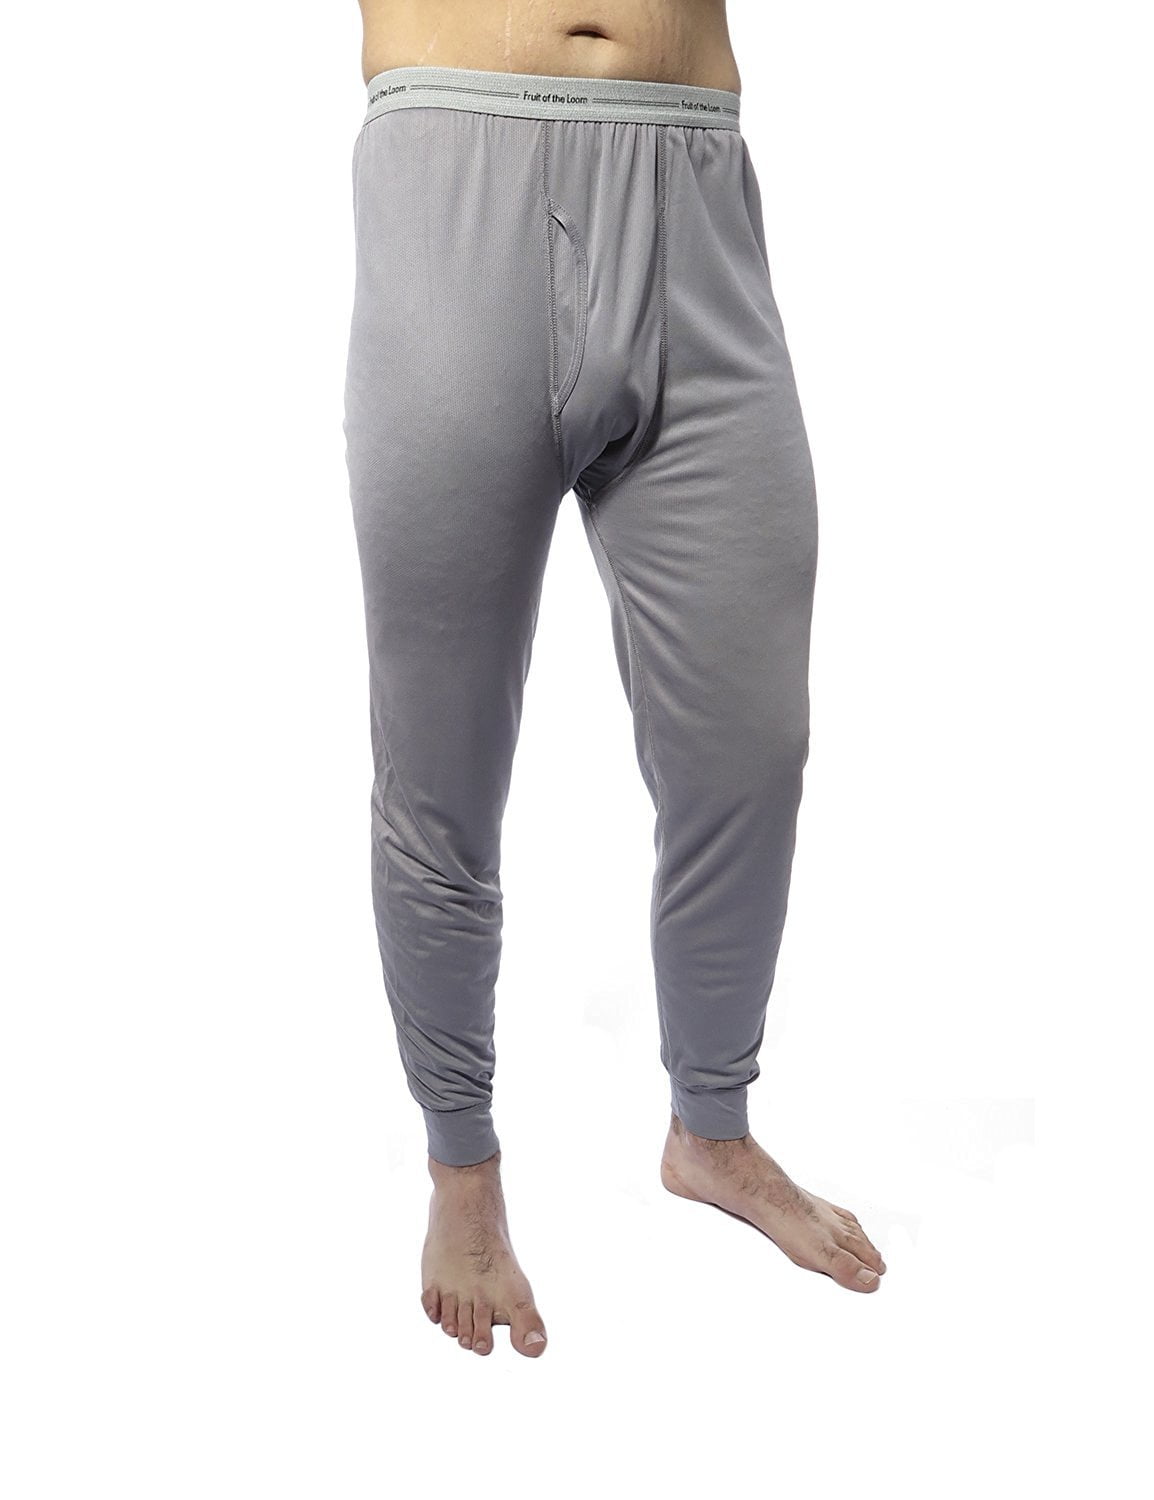 Mens Heat Holder Thermal Underwear Long Johns Charcoal Grey 